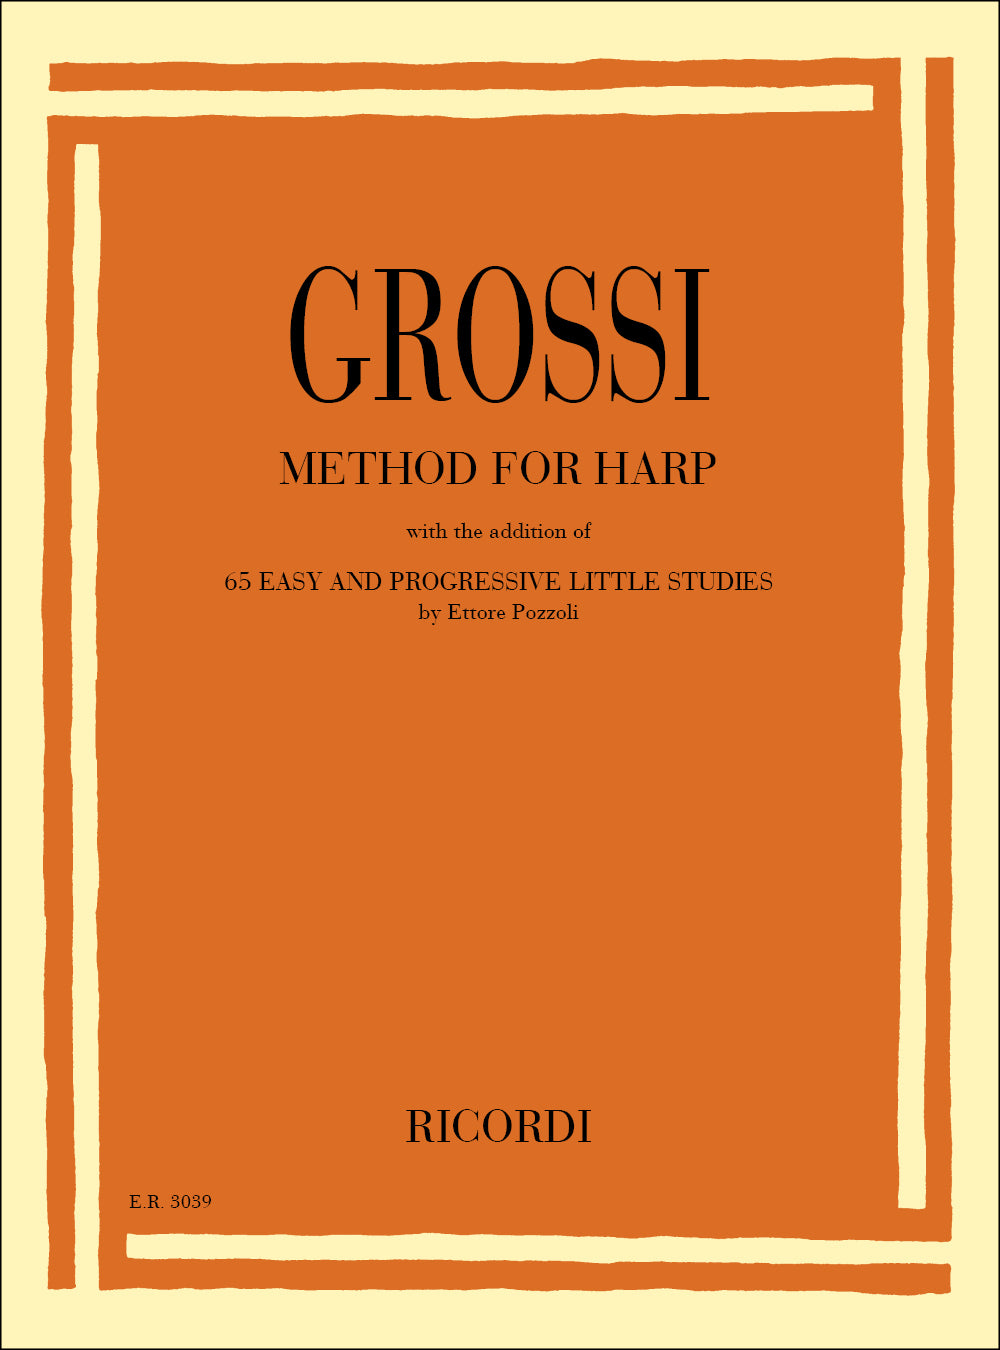 Grossi method for harp